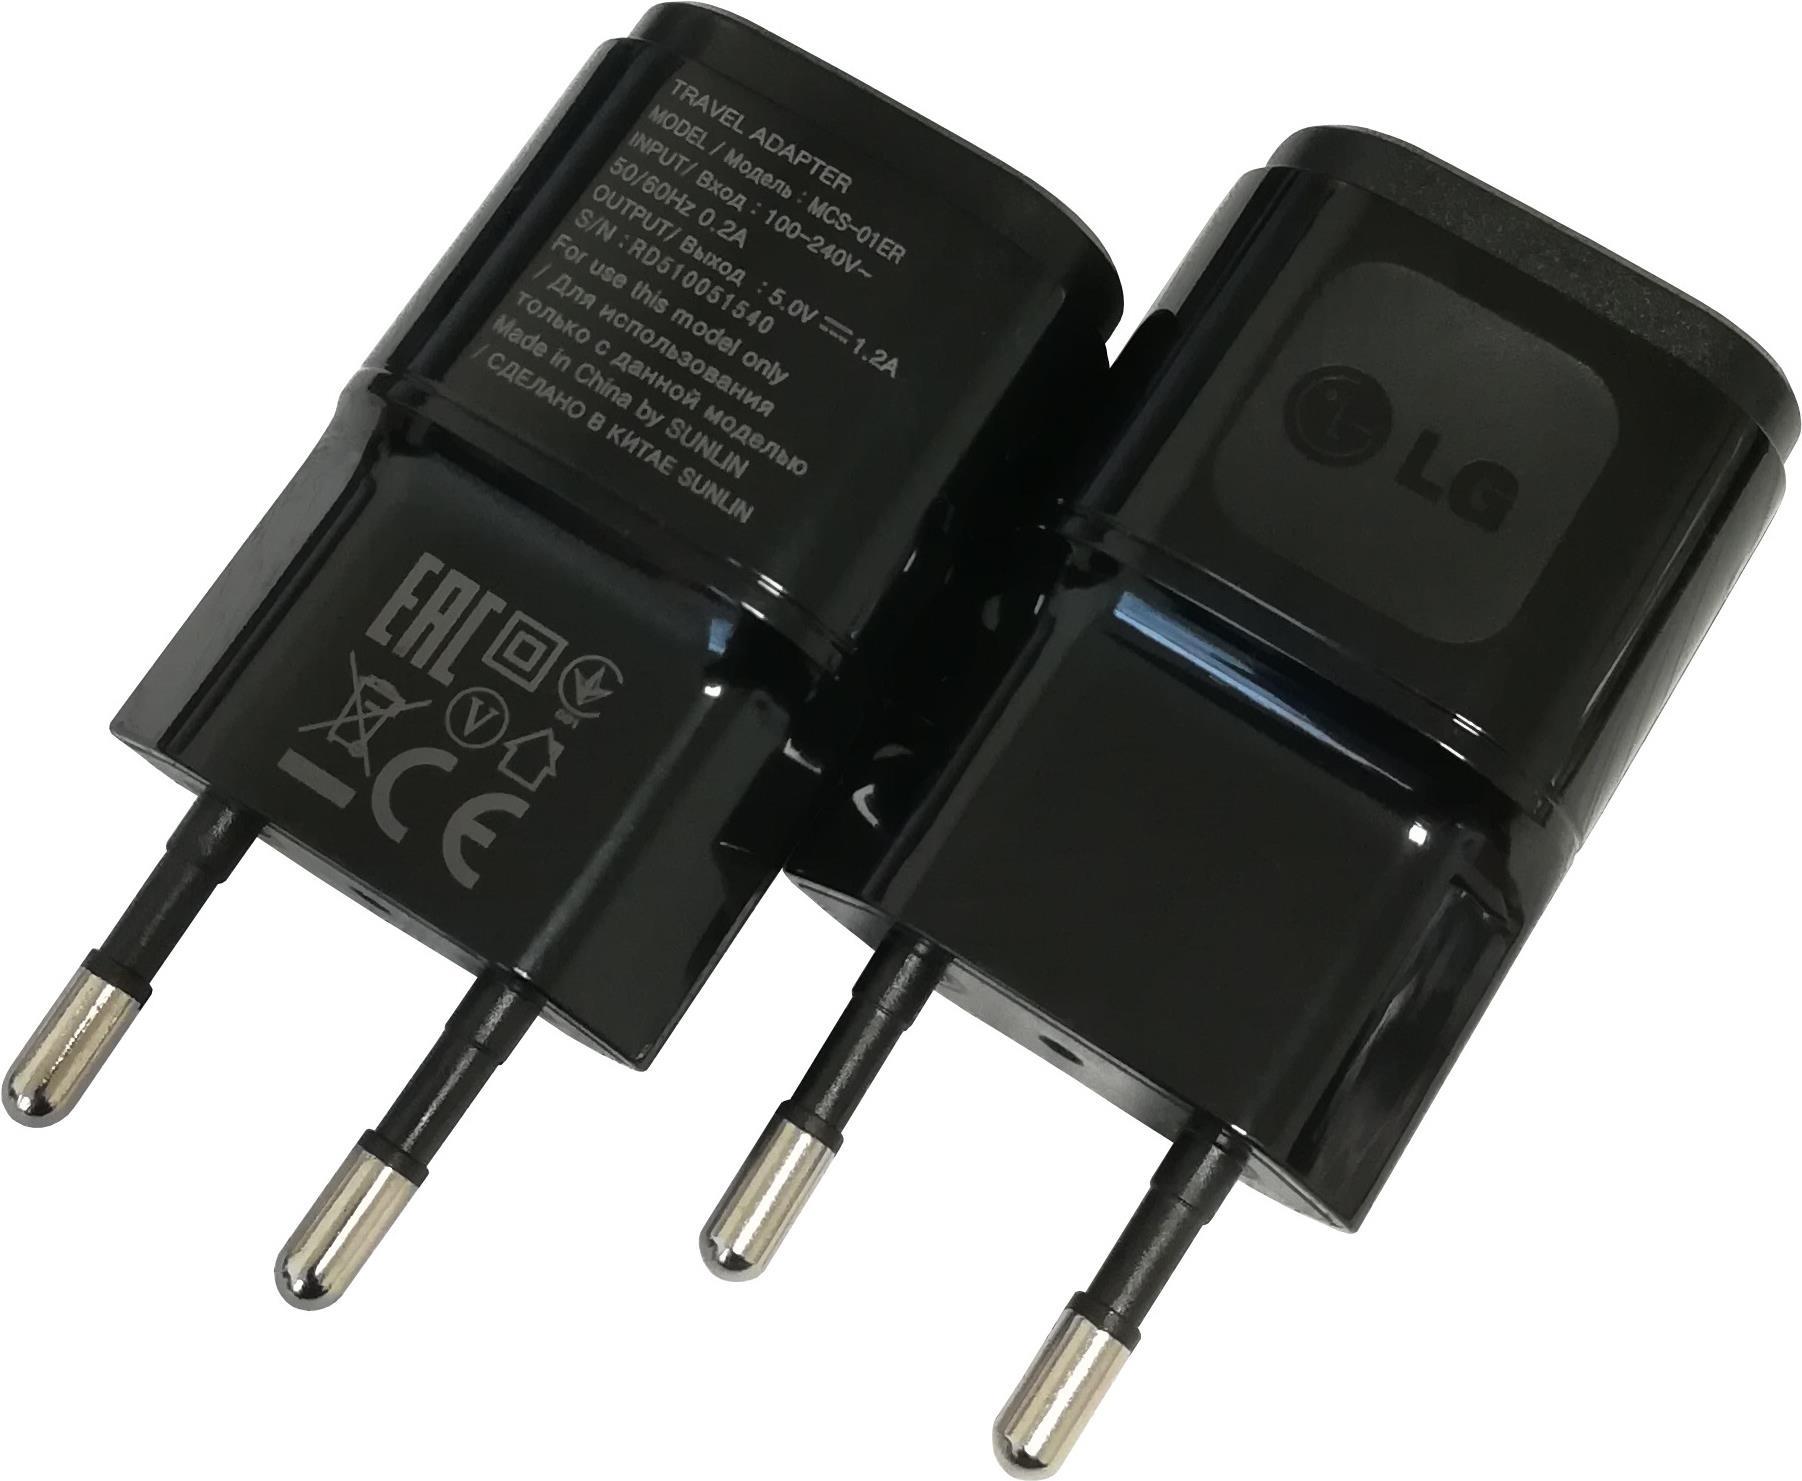 LG USB Netzteil Reise Handy Ladegerät MCS-01er